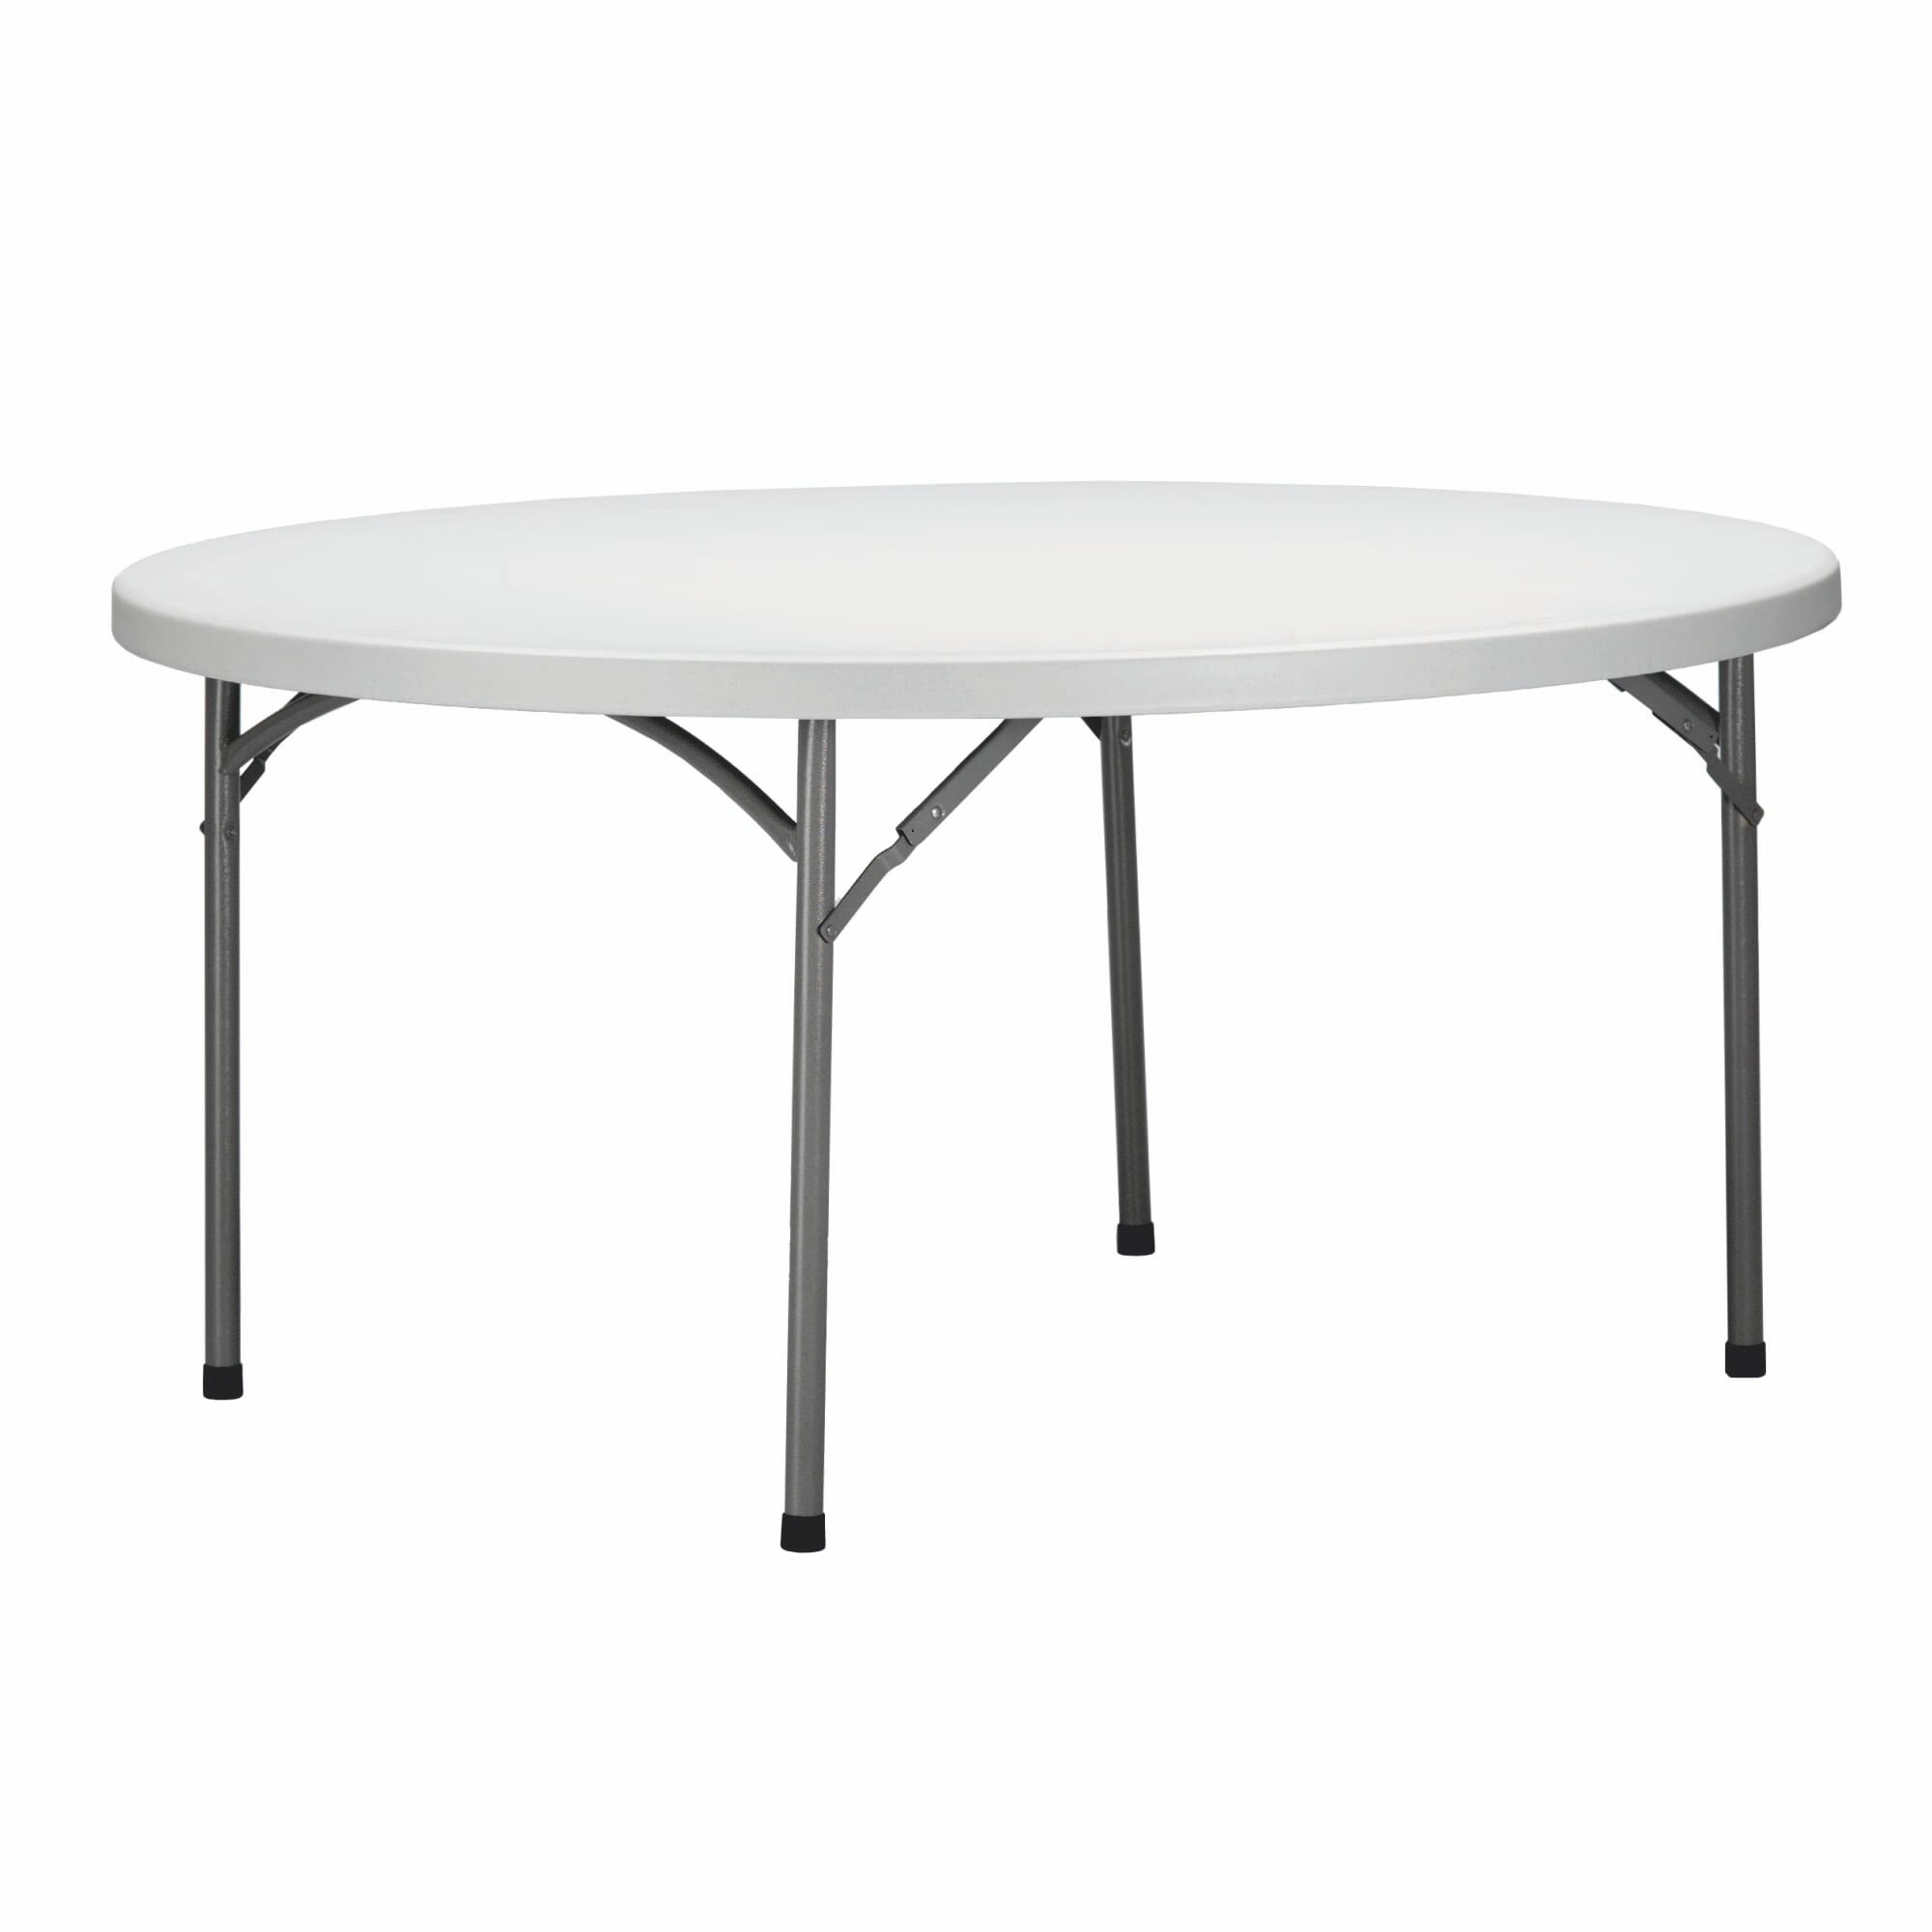 Garbar Krauss round folding table indoors, outdoors Ø160